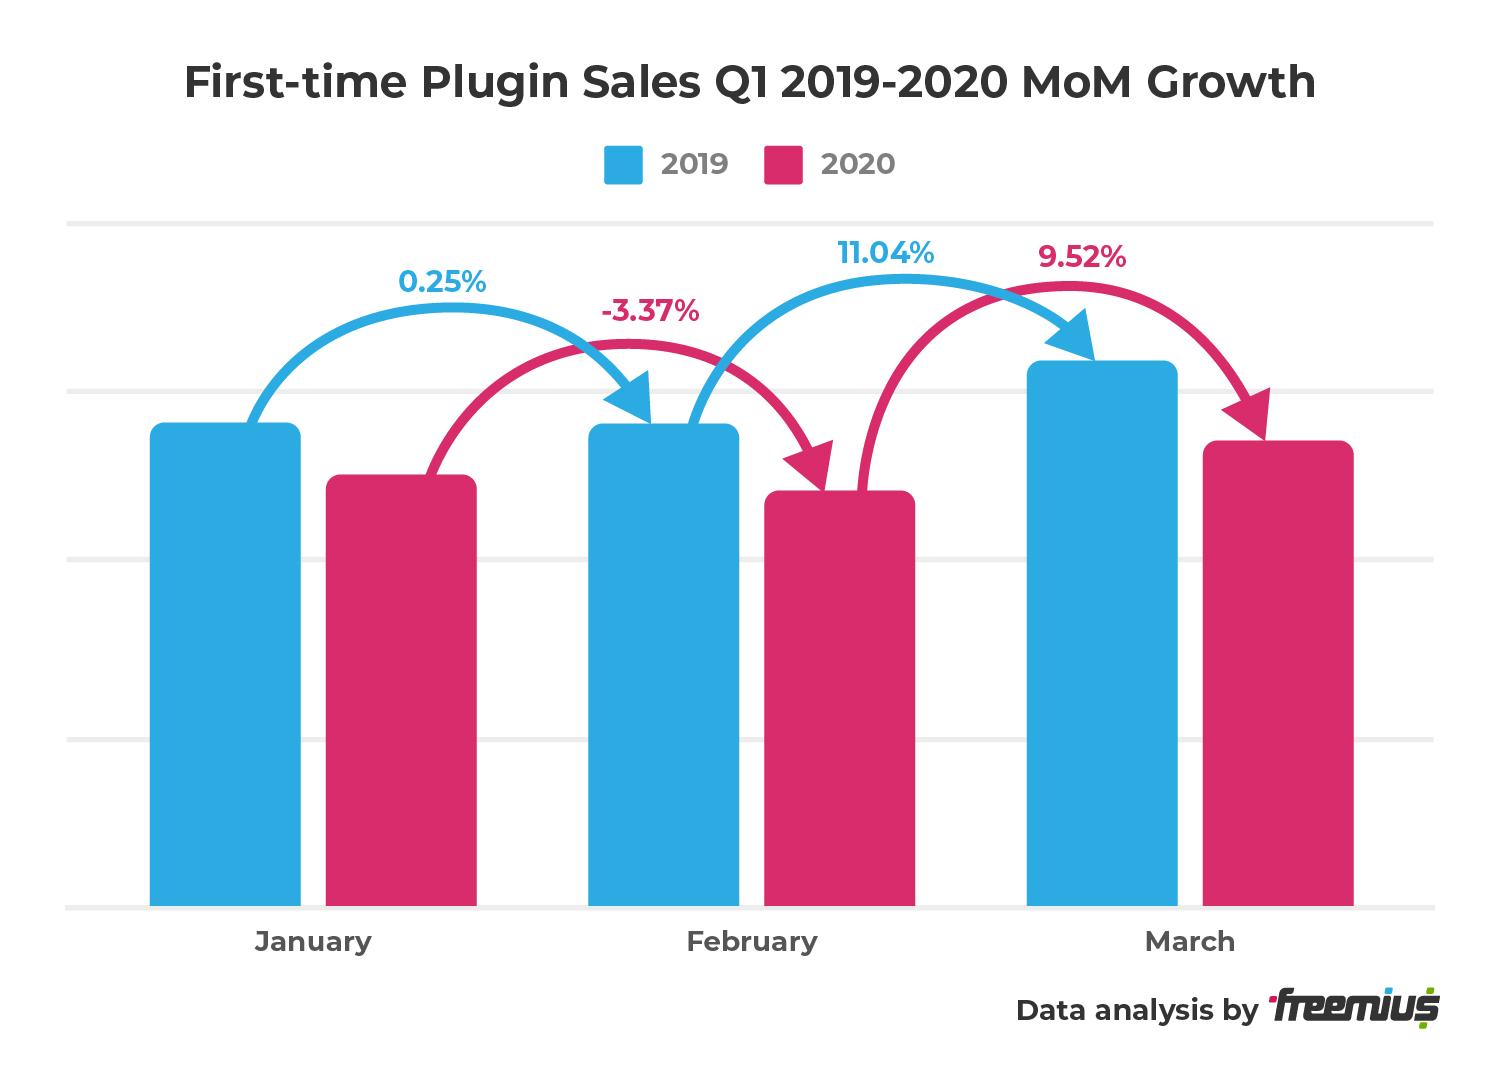 Freemius data analysis - First-time Plugin Sales Q1 2019-2020 MoM Growth